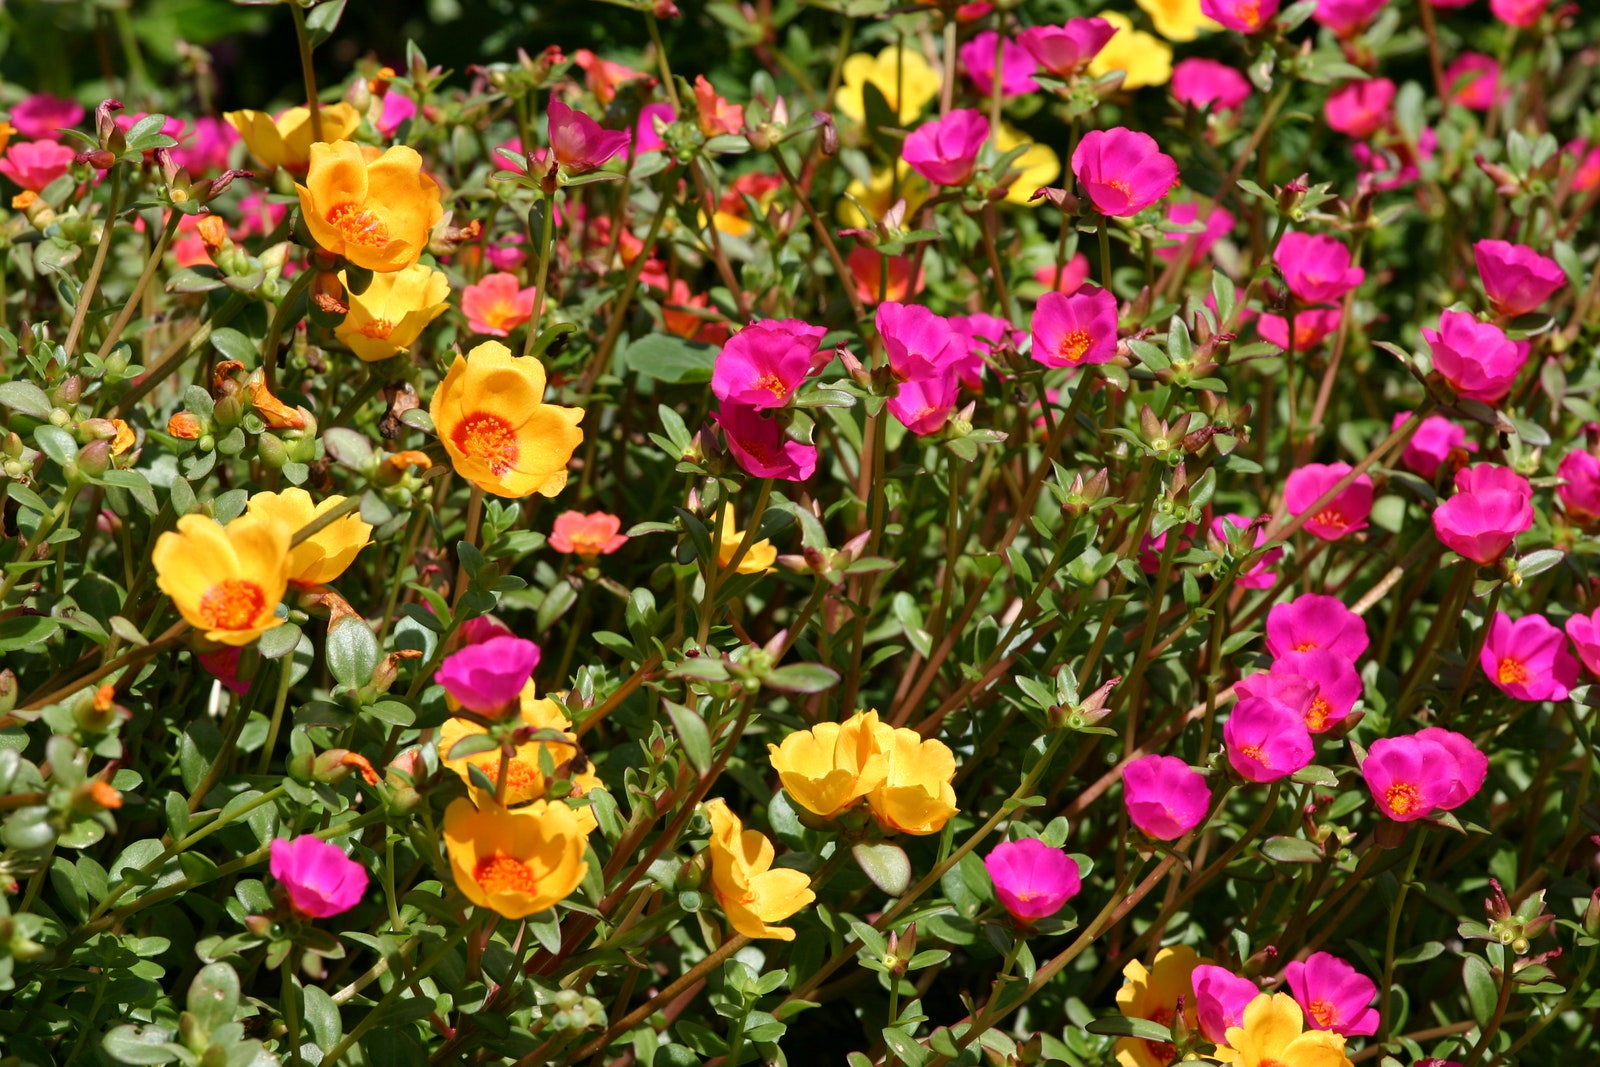 Copious happy flowers on the vibrant portulaca plants.